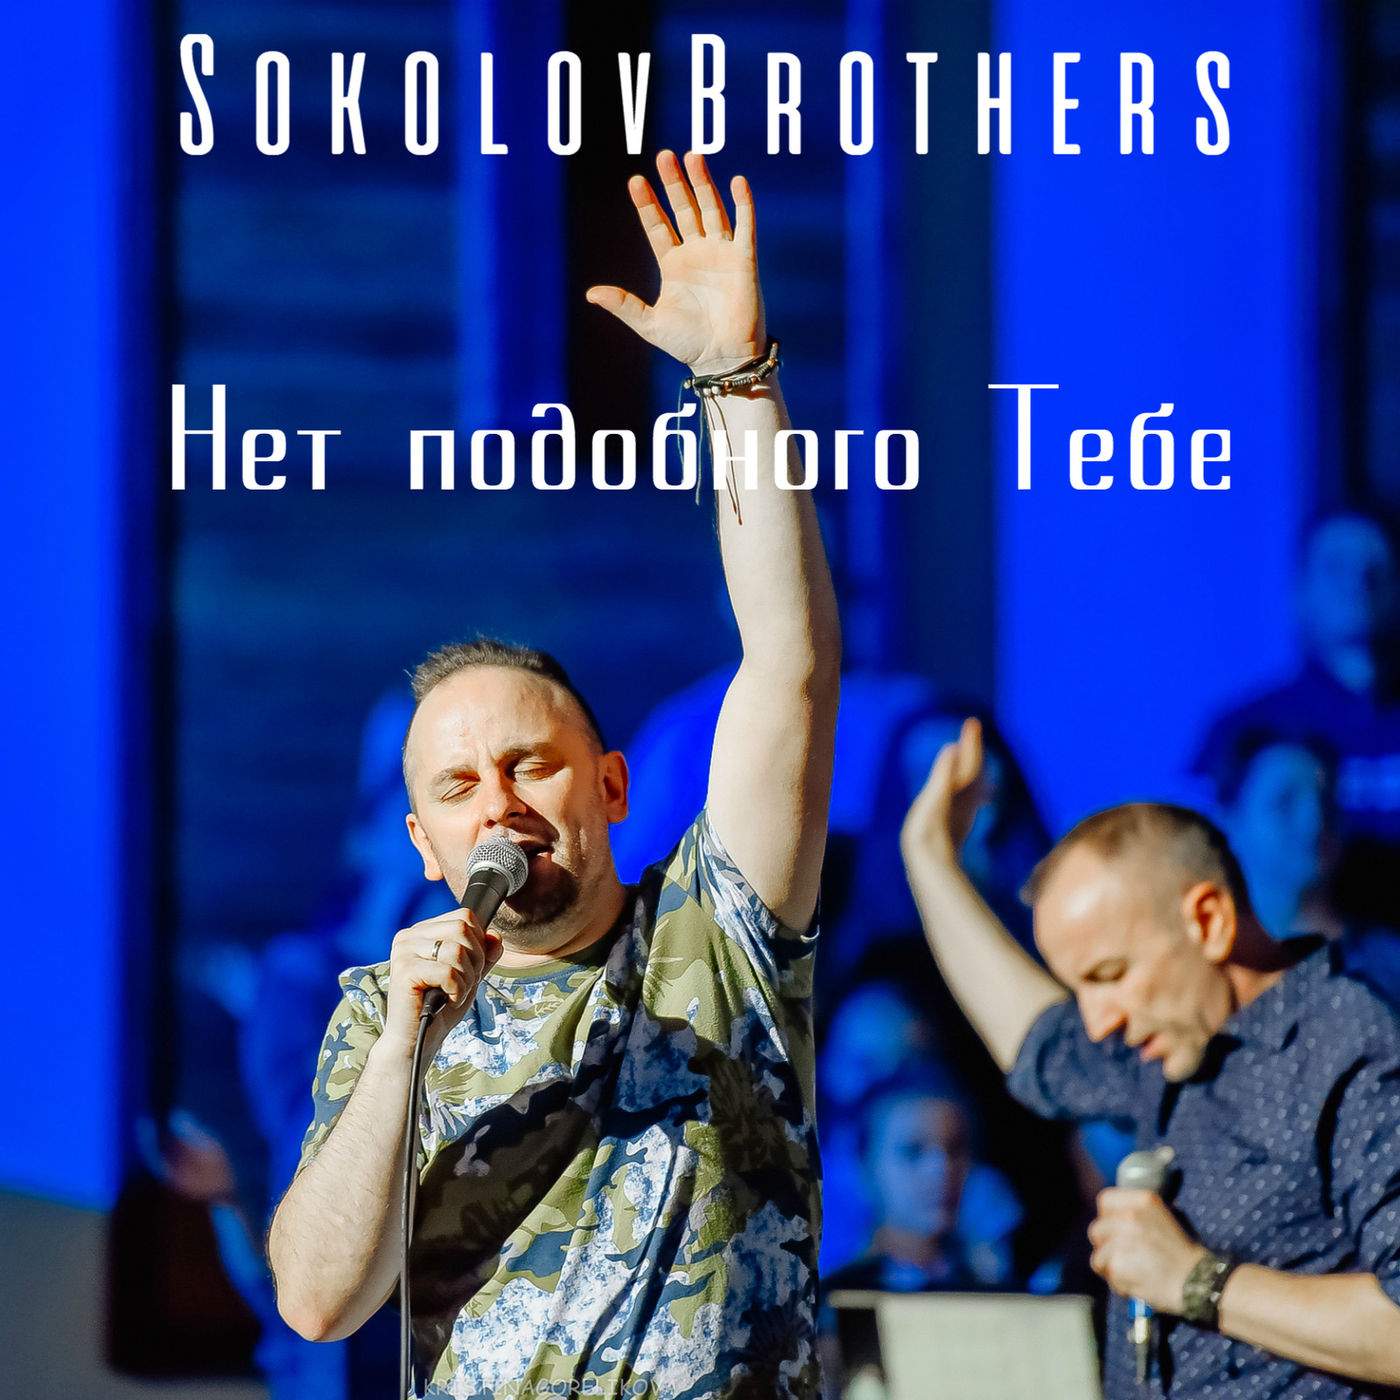 Sokolovbrothers - Нет подобного тебе (2019)